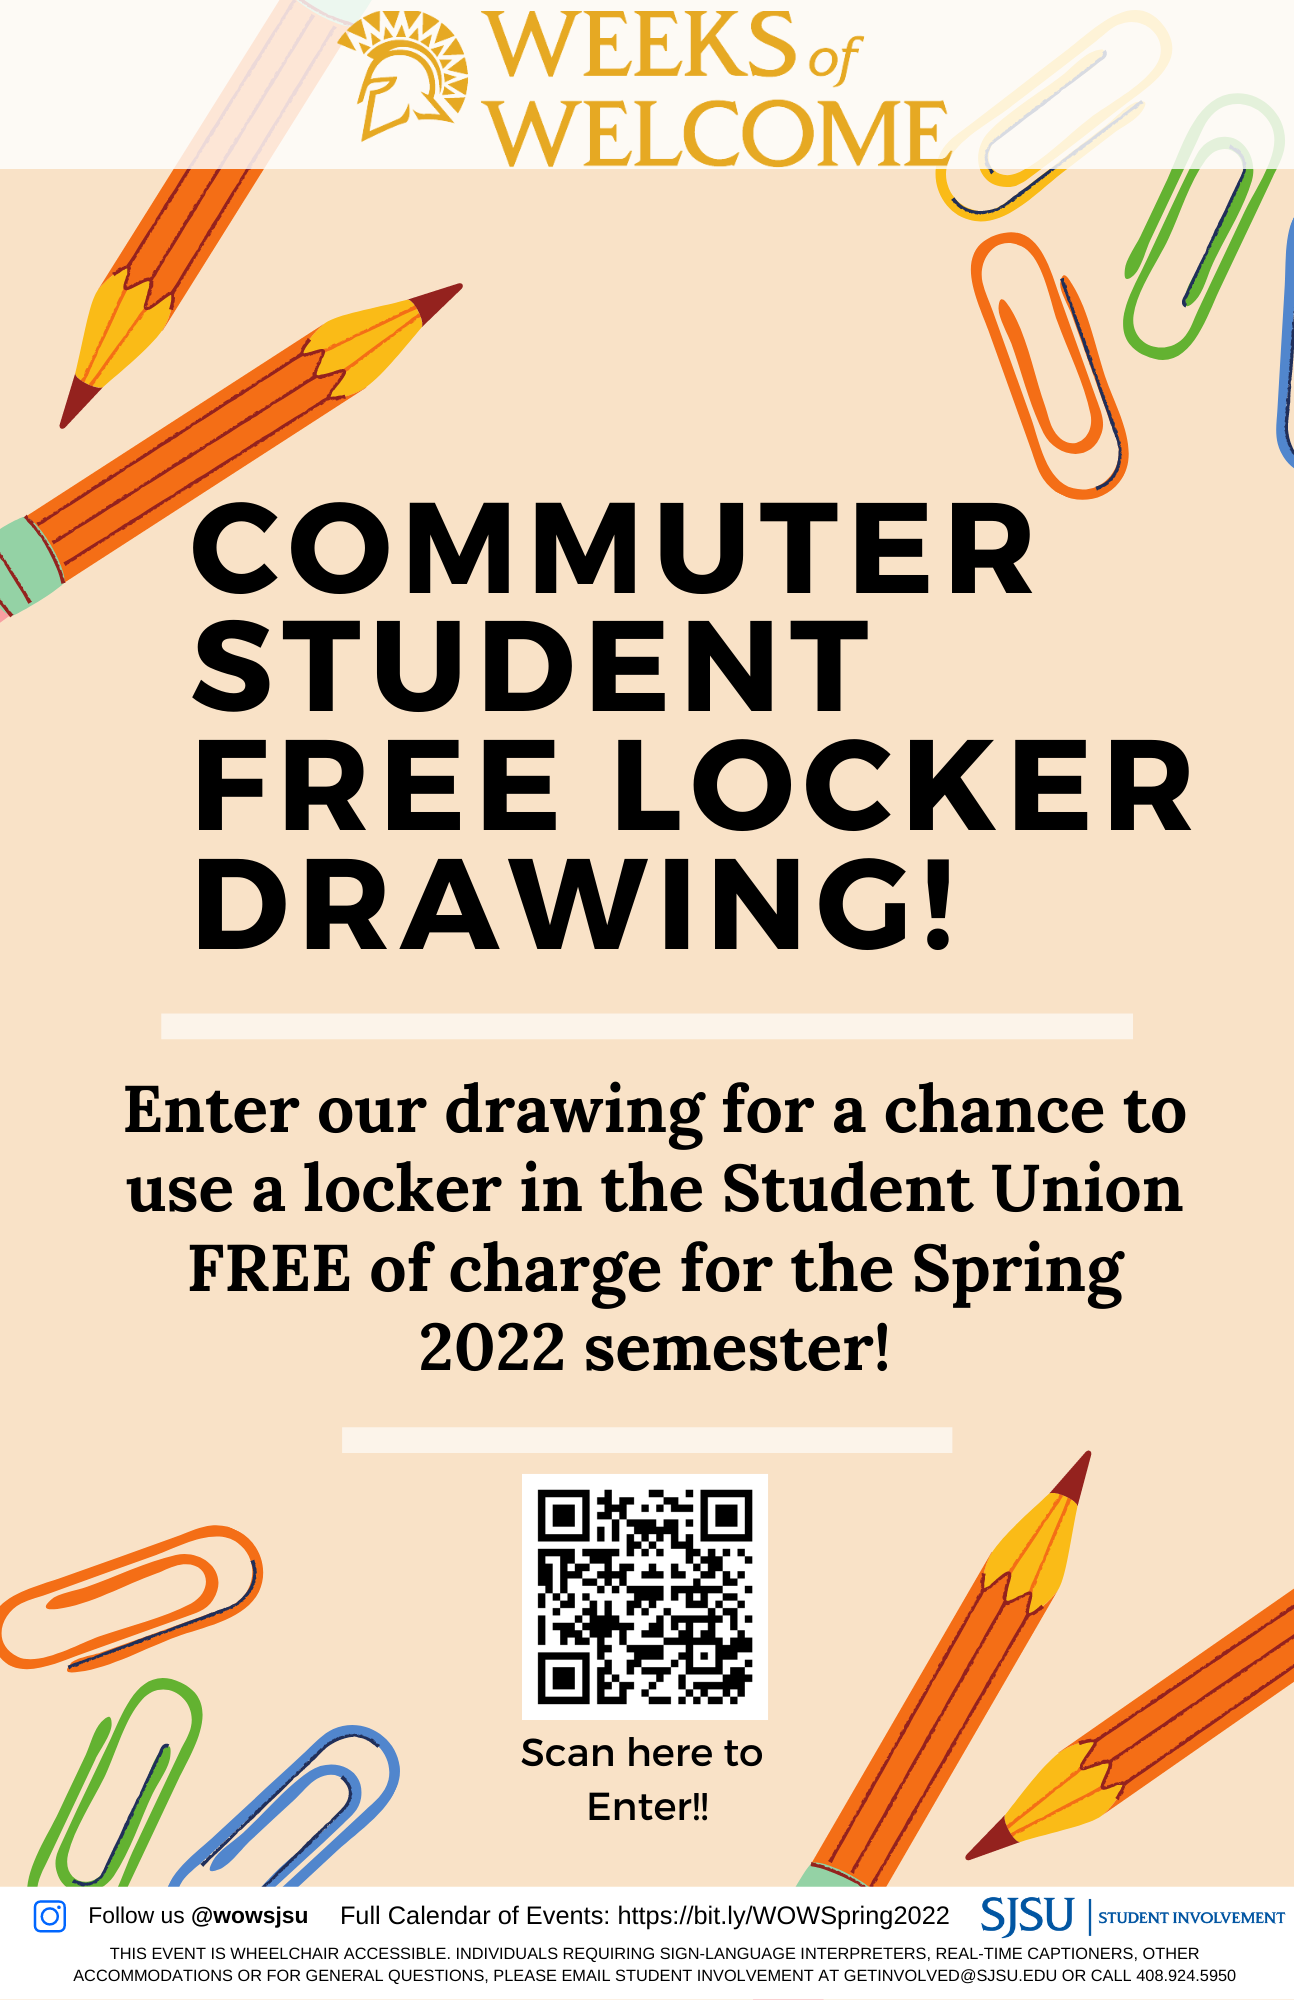 Commuter Student Free Locker Drawing